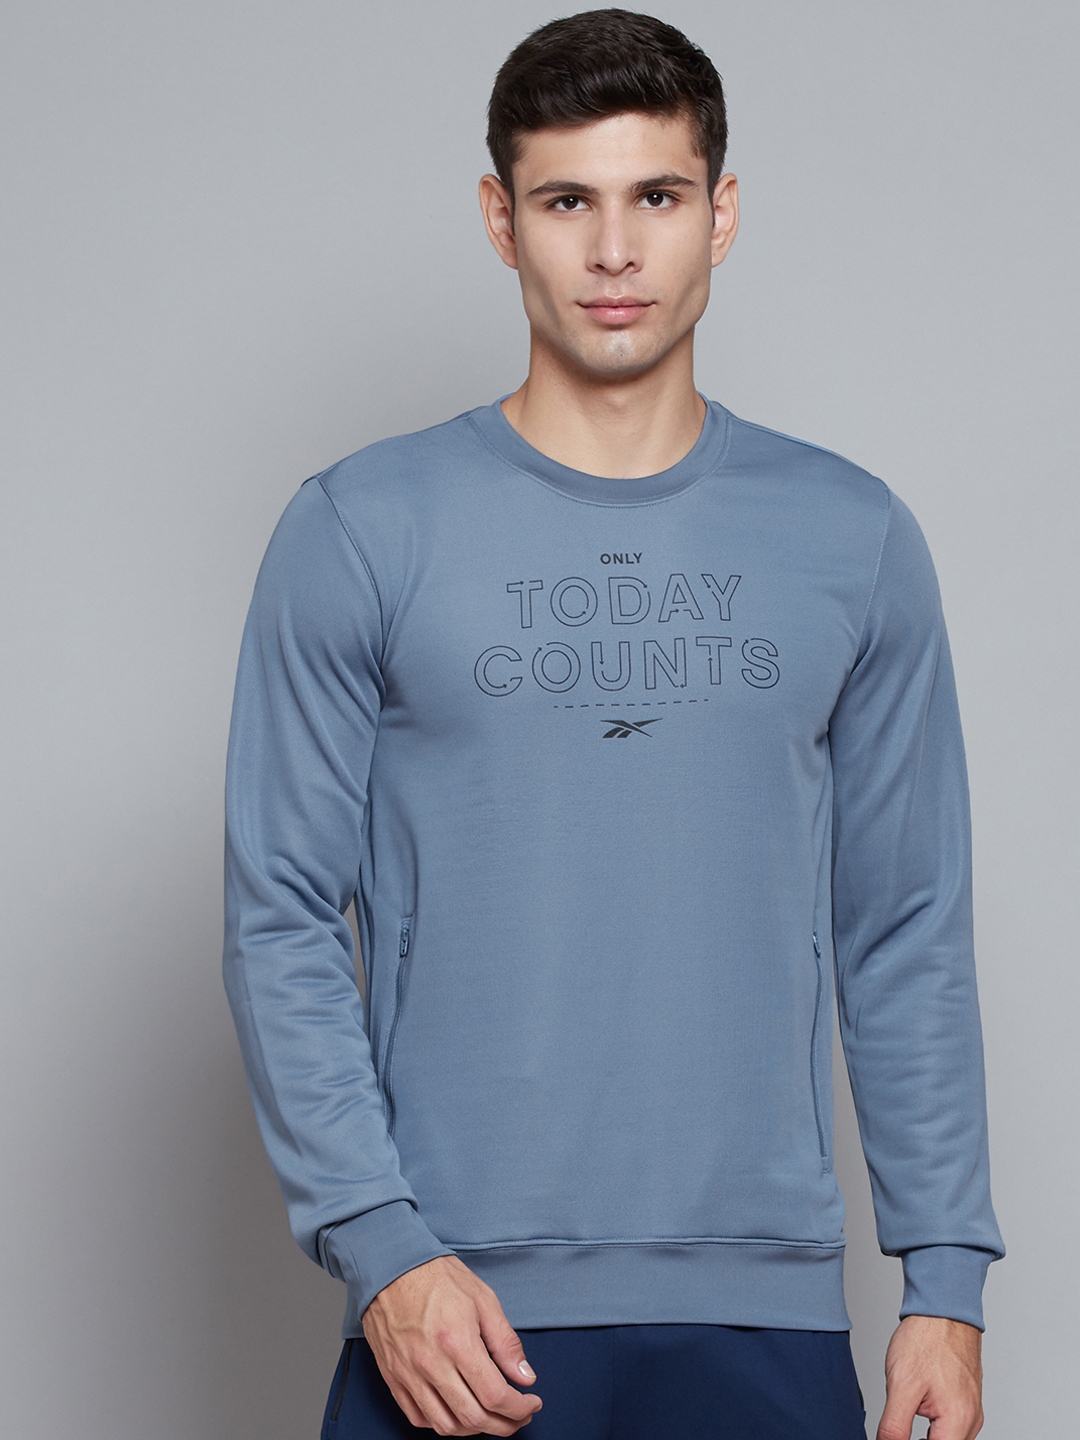 Reebok Men Blue Typographic Graphic Print Sweatshirt